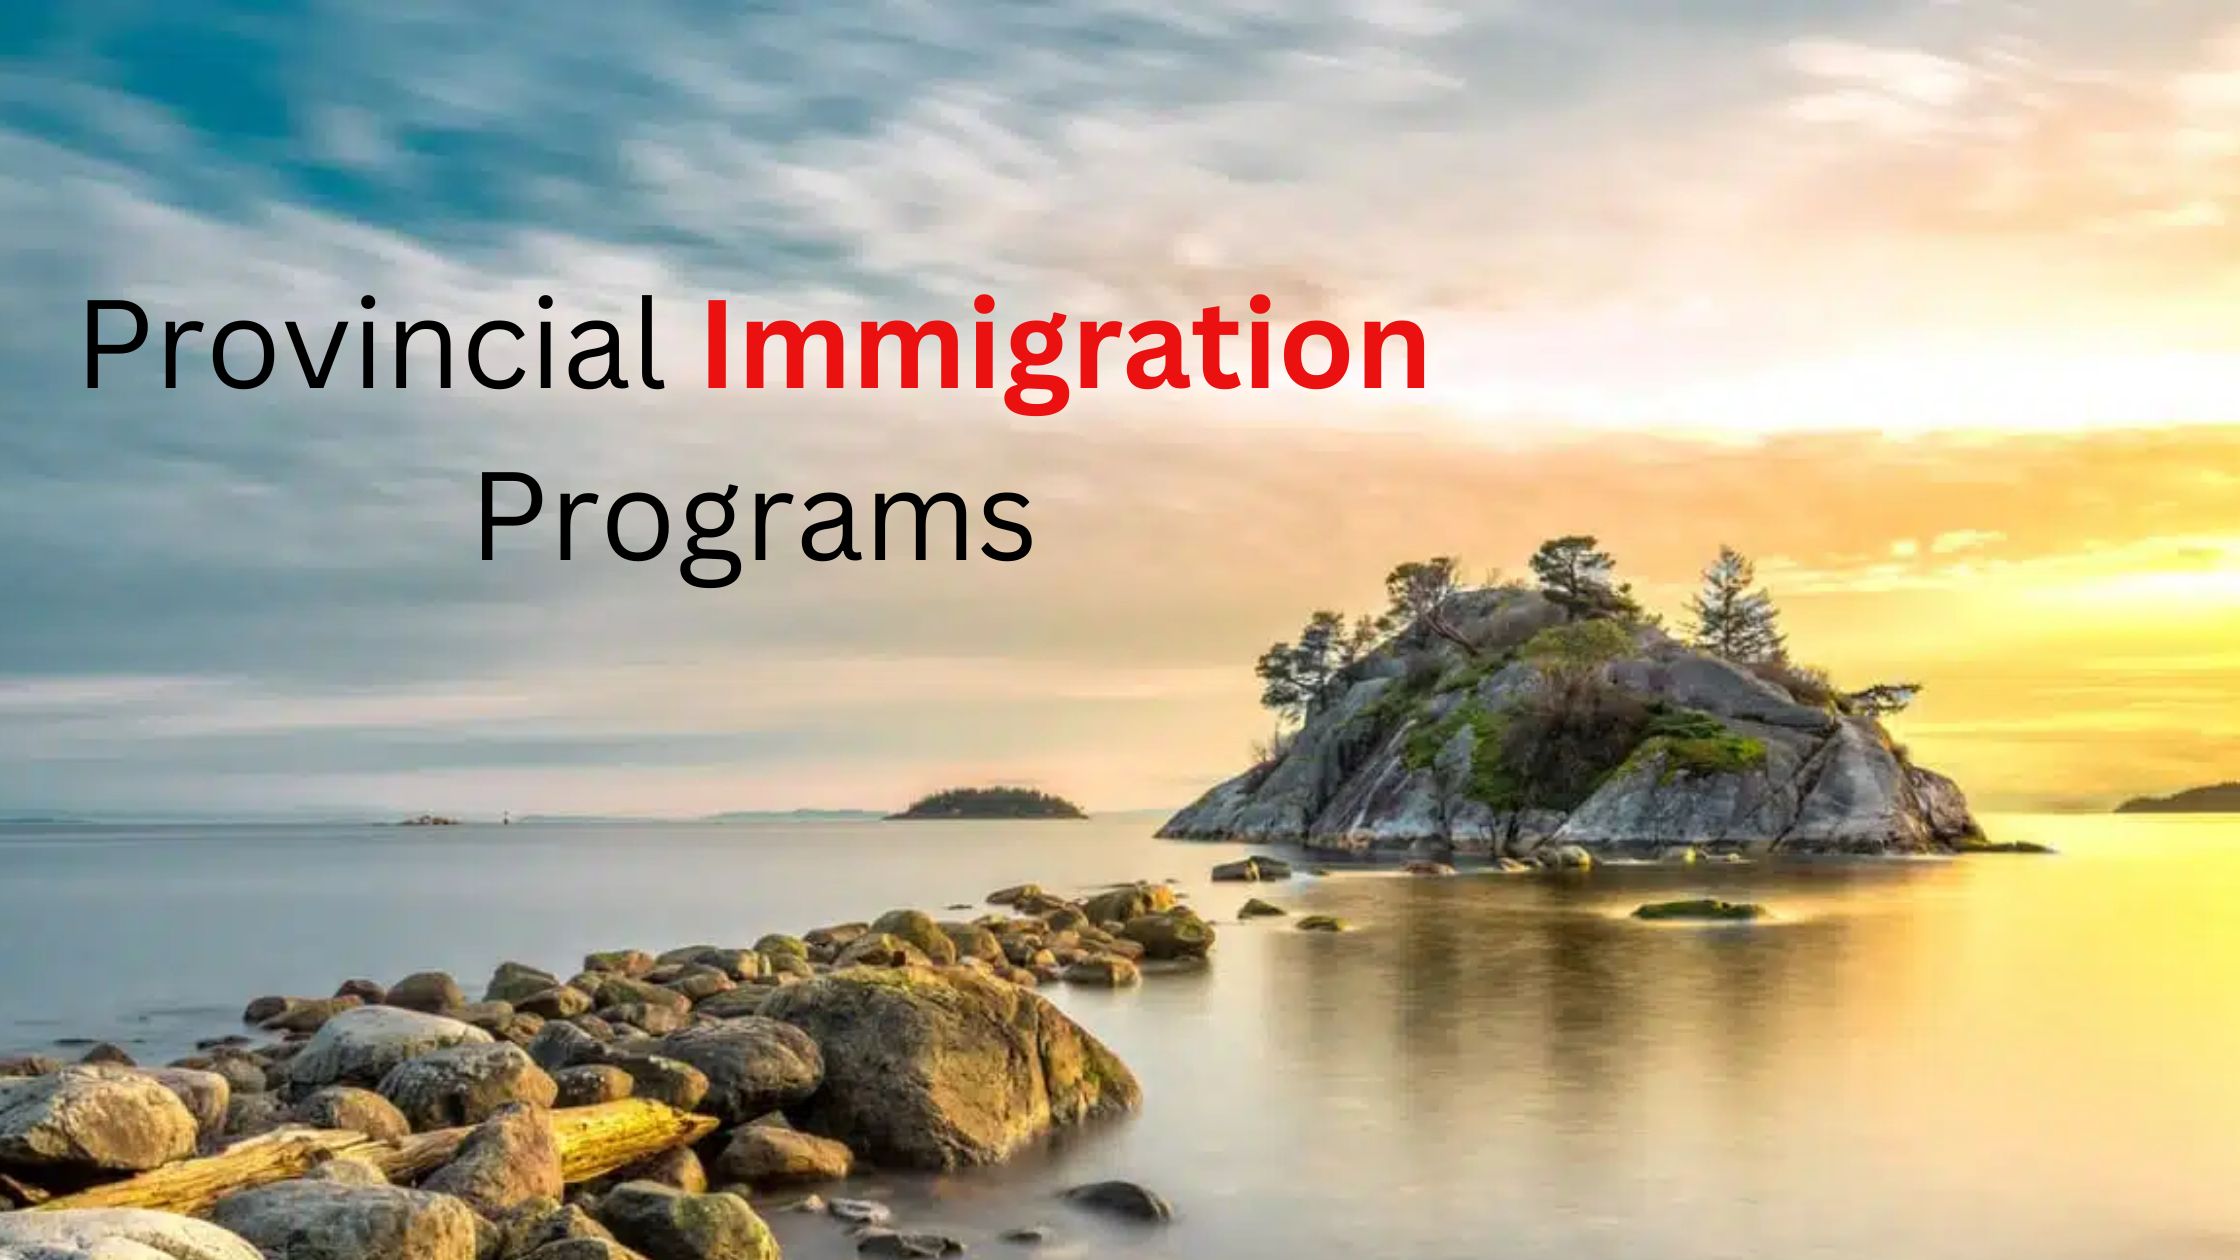 Ontario, Quebec, British Columbia, New Brunswick, and Alberta issue invitations through provincial immigration programs